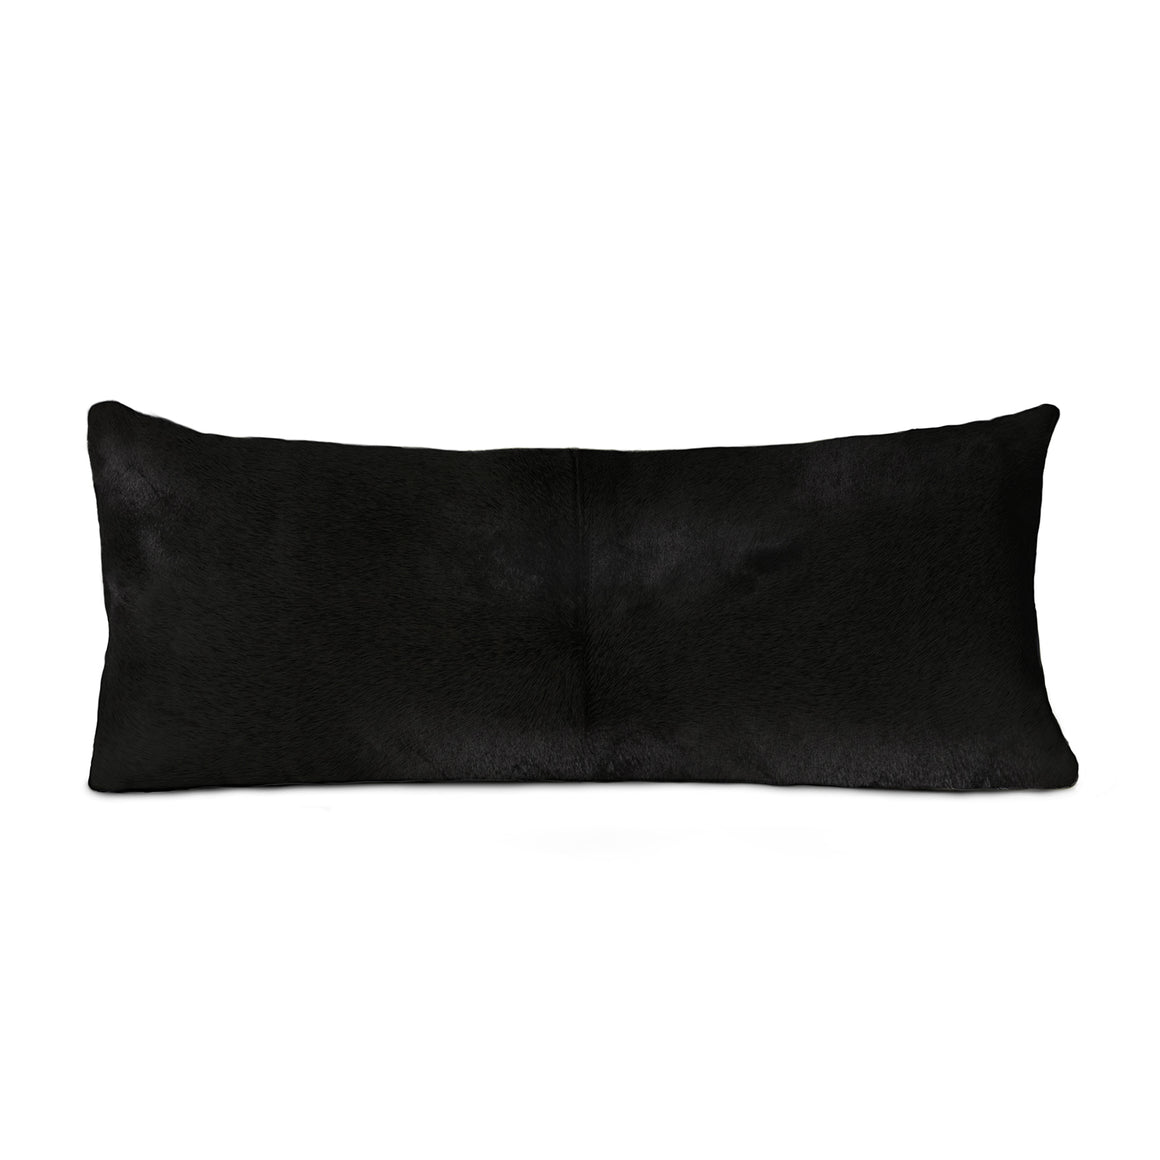 Morgan Hair on Hide Rectangle Pillow (Black)